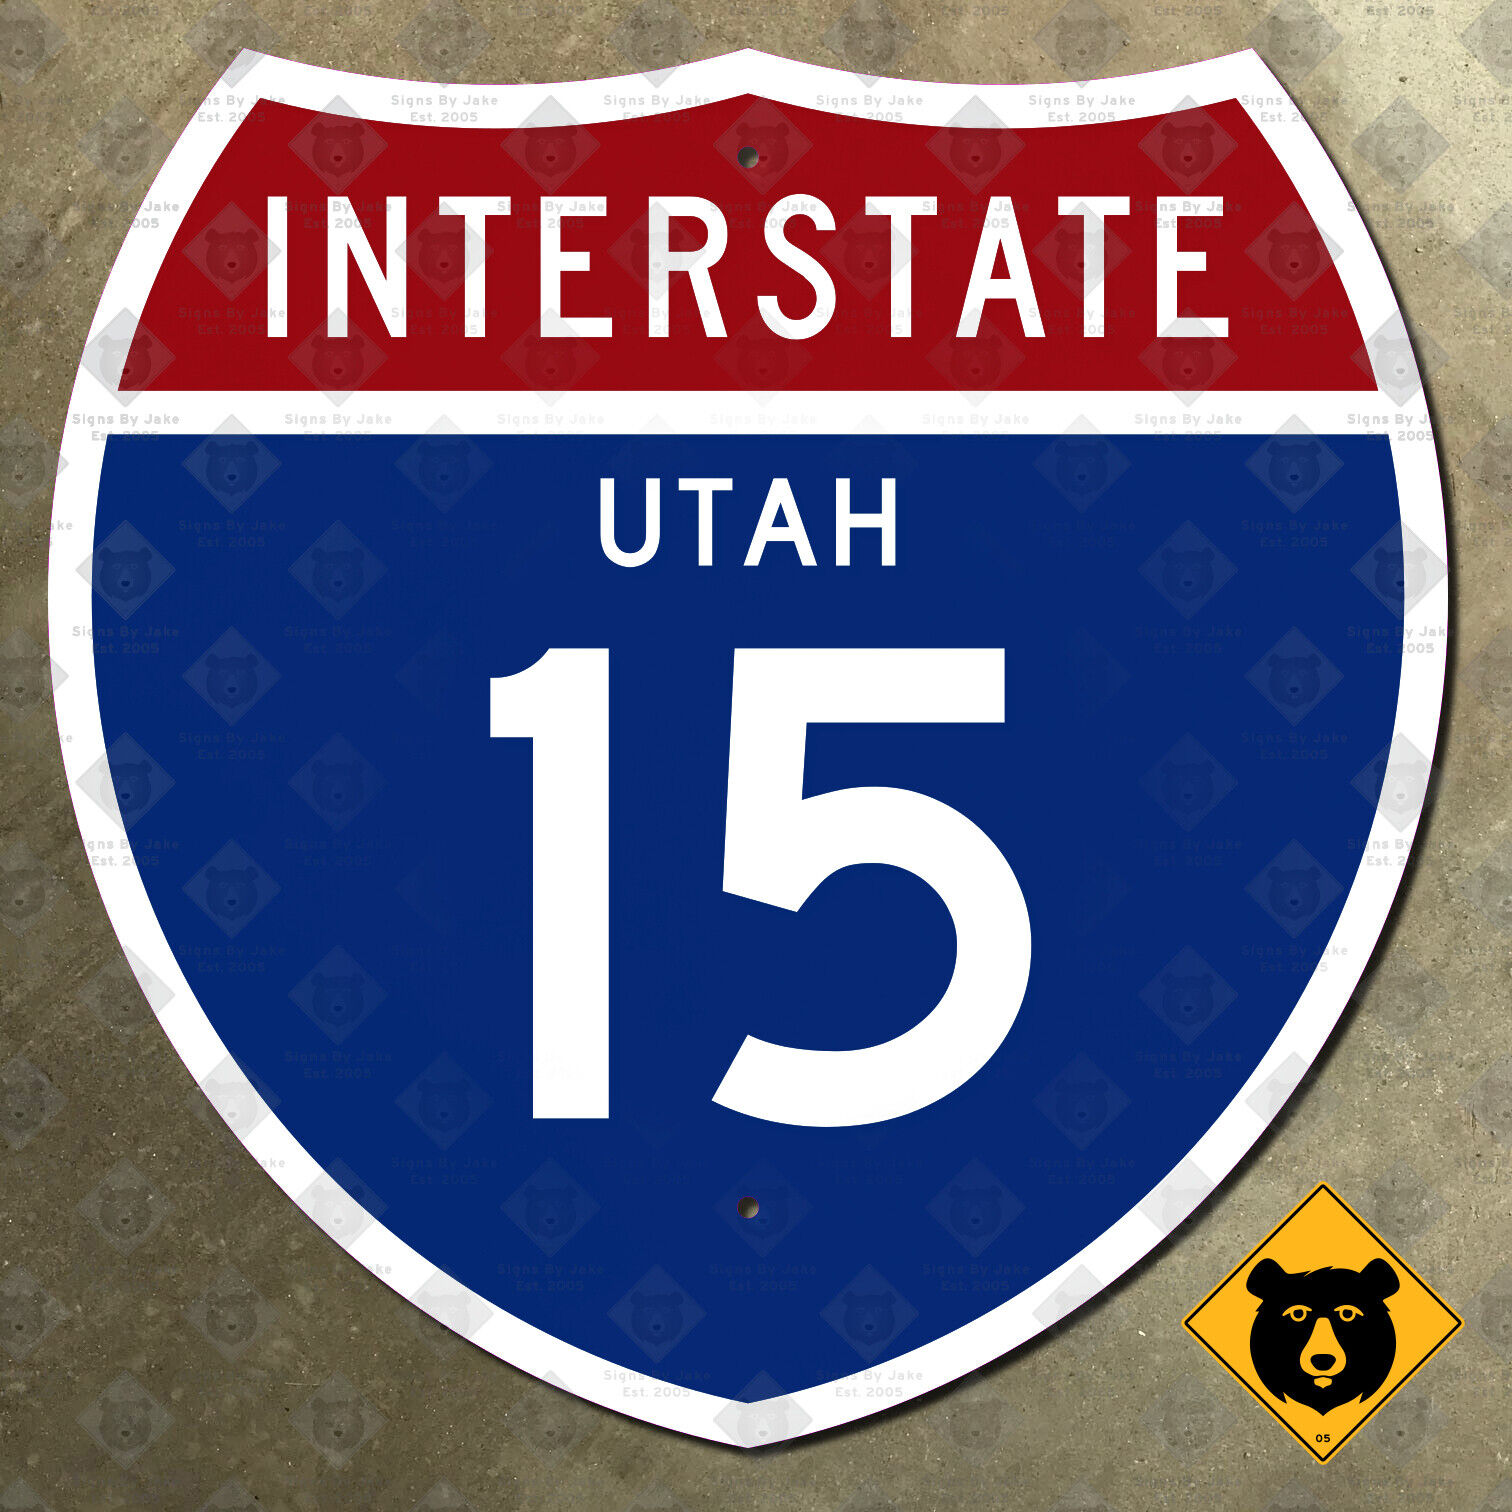 Utah Interstate 15 highway route marker road sign 1957 Salt Lake City 18x18